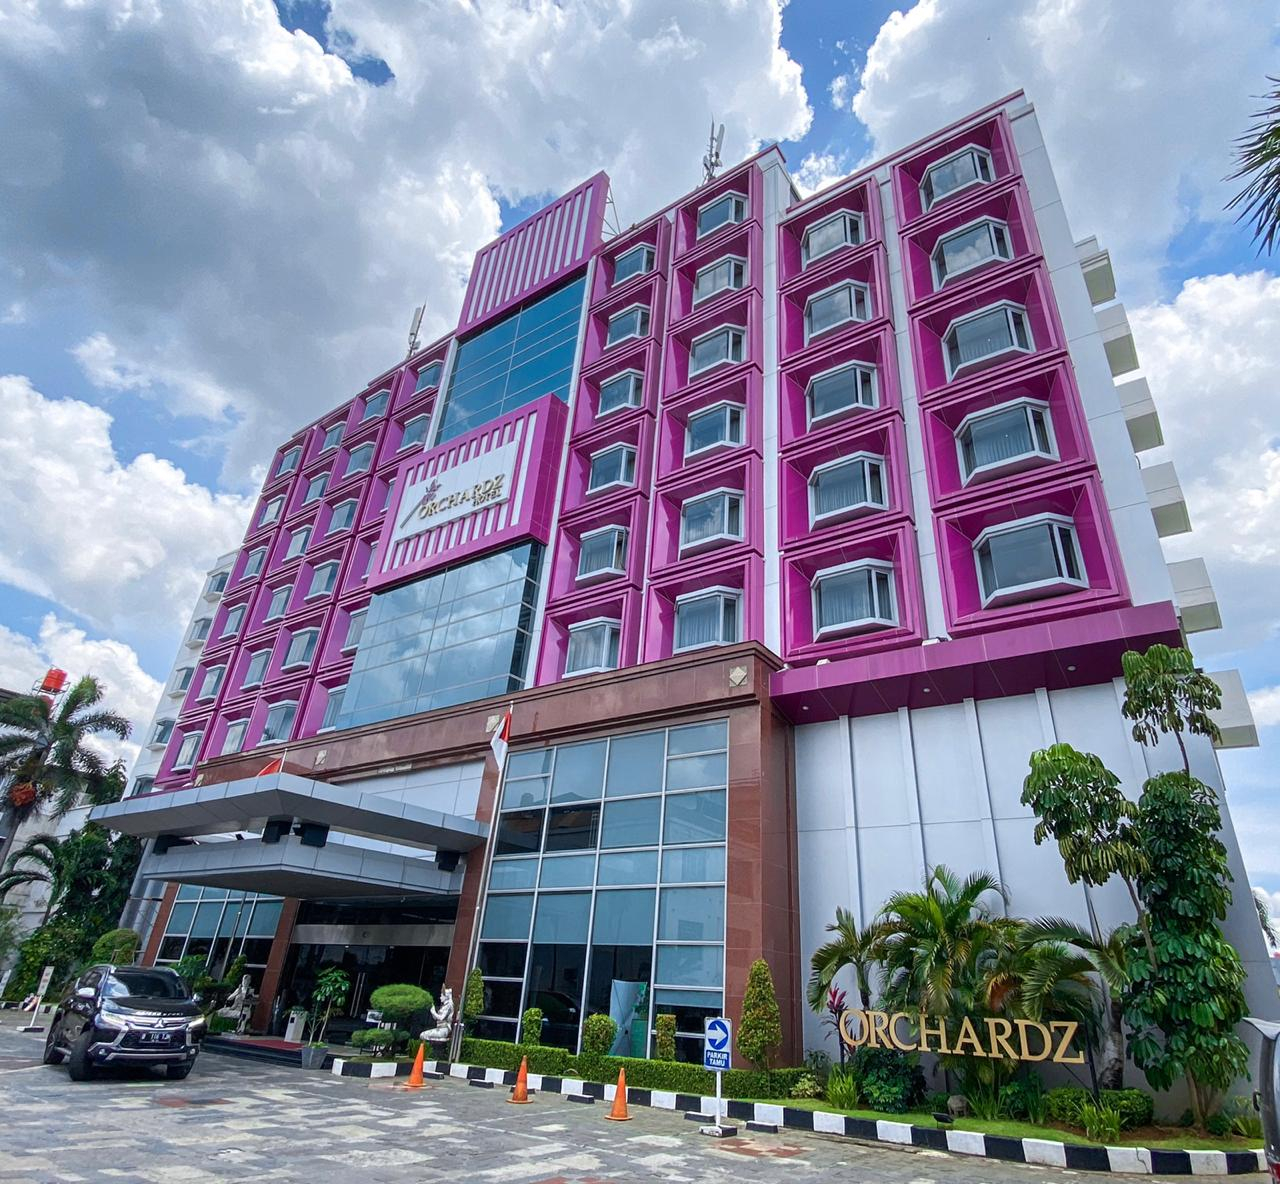 Hotel Orchardz Jayakarta Kemayoran, Jakarta Pusat